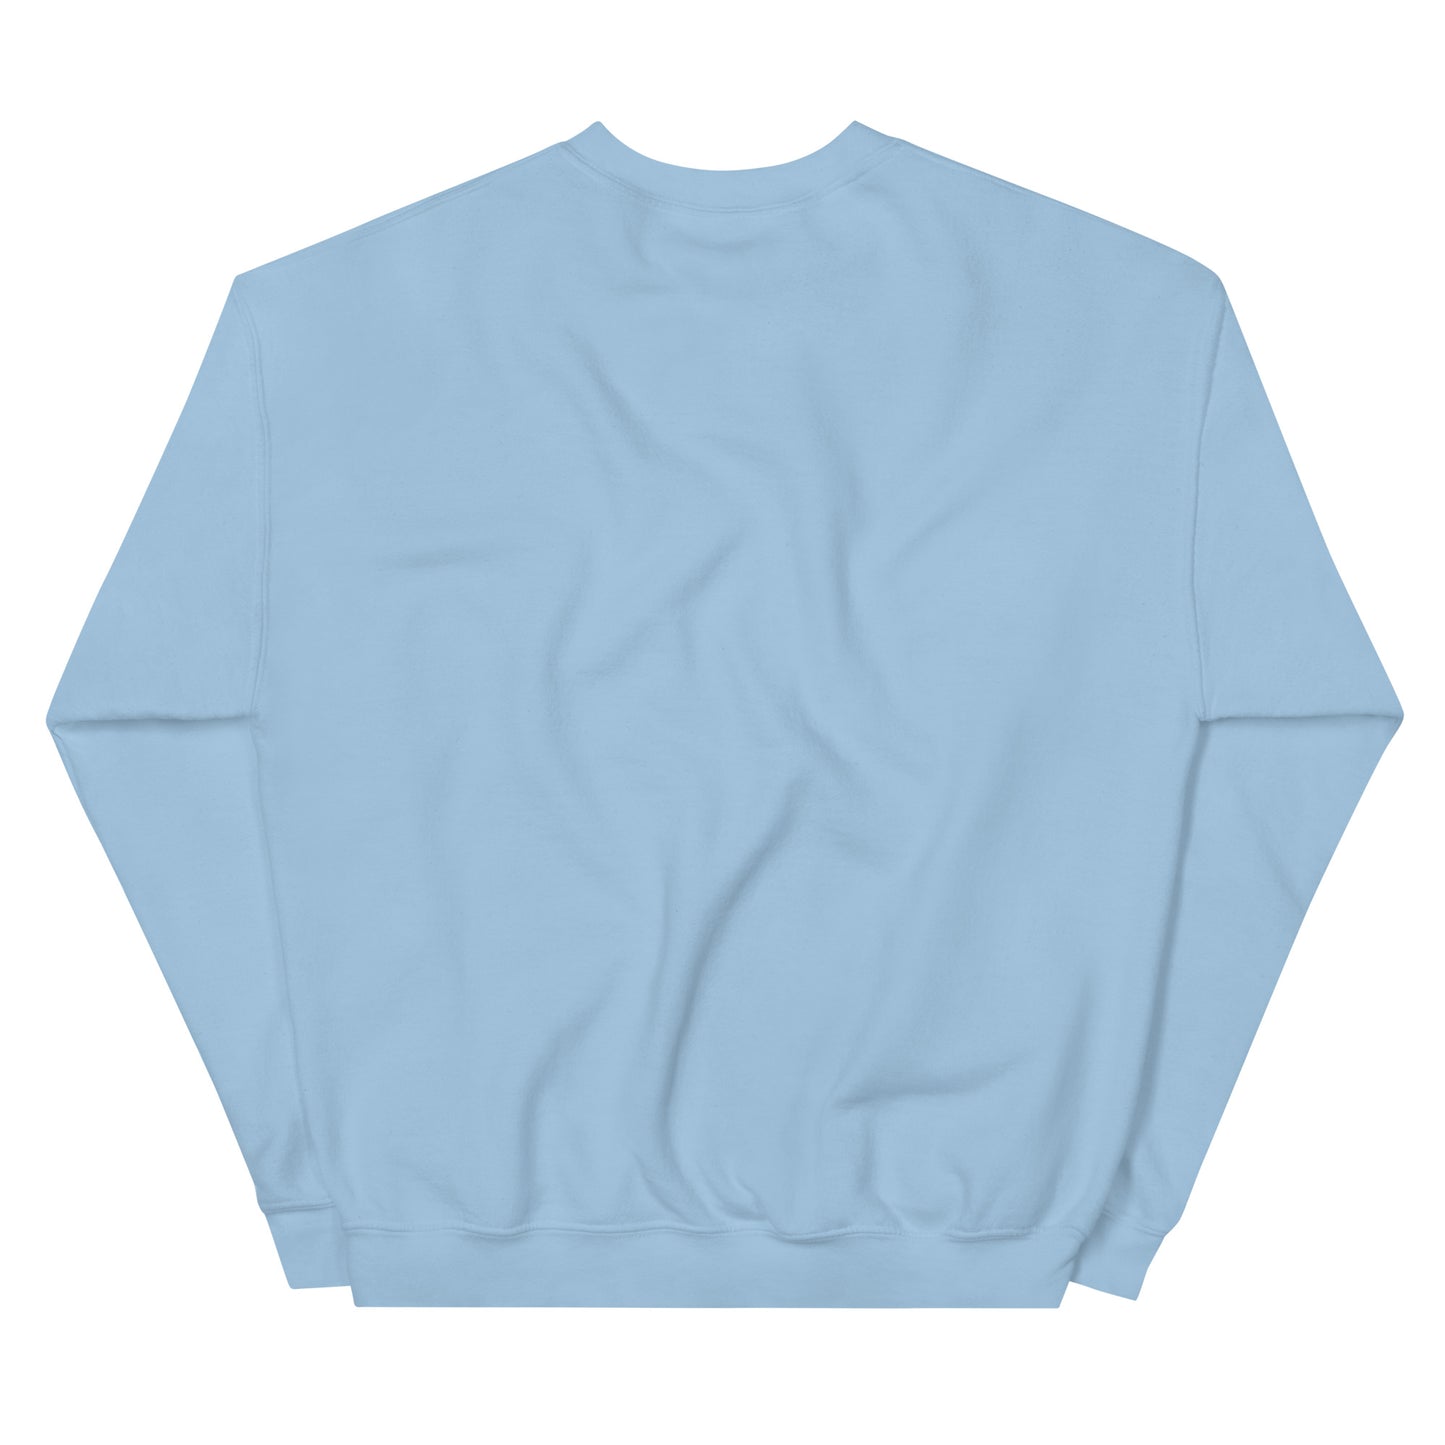 Claustrophobic Sweatshirt